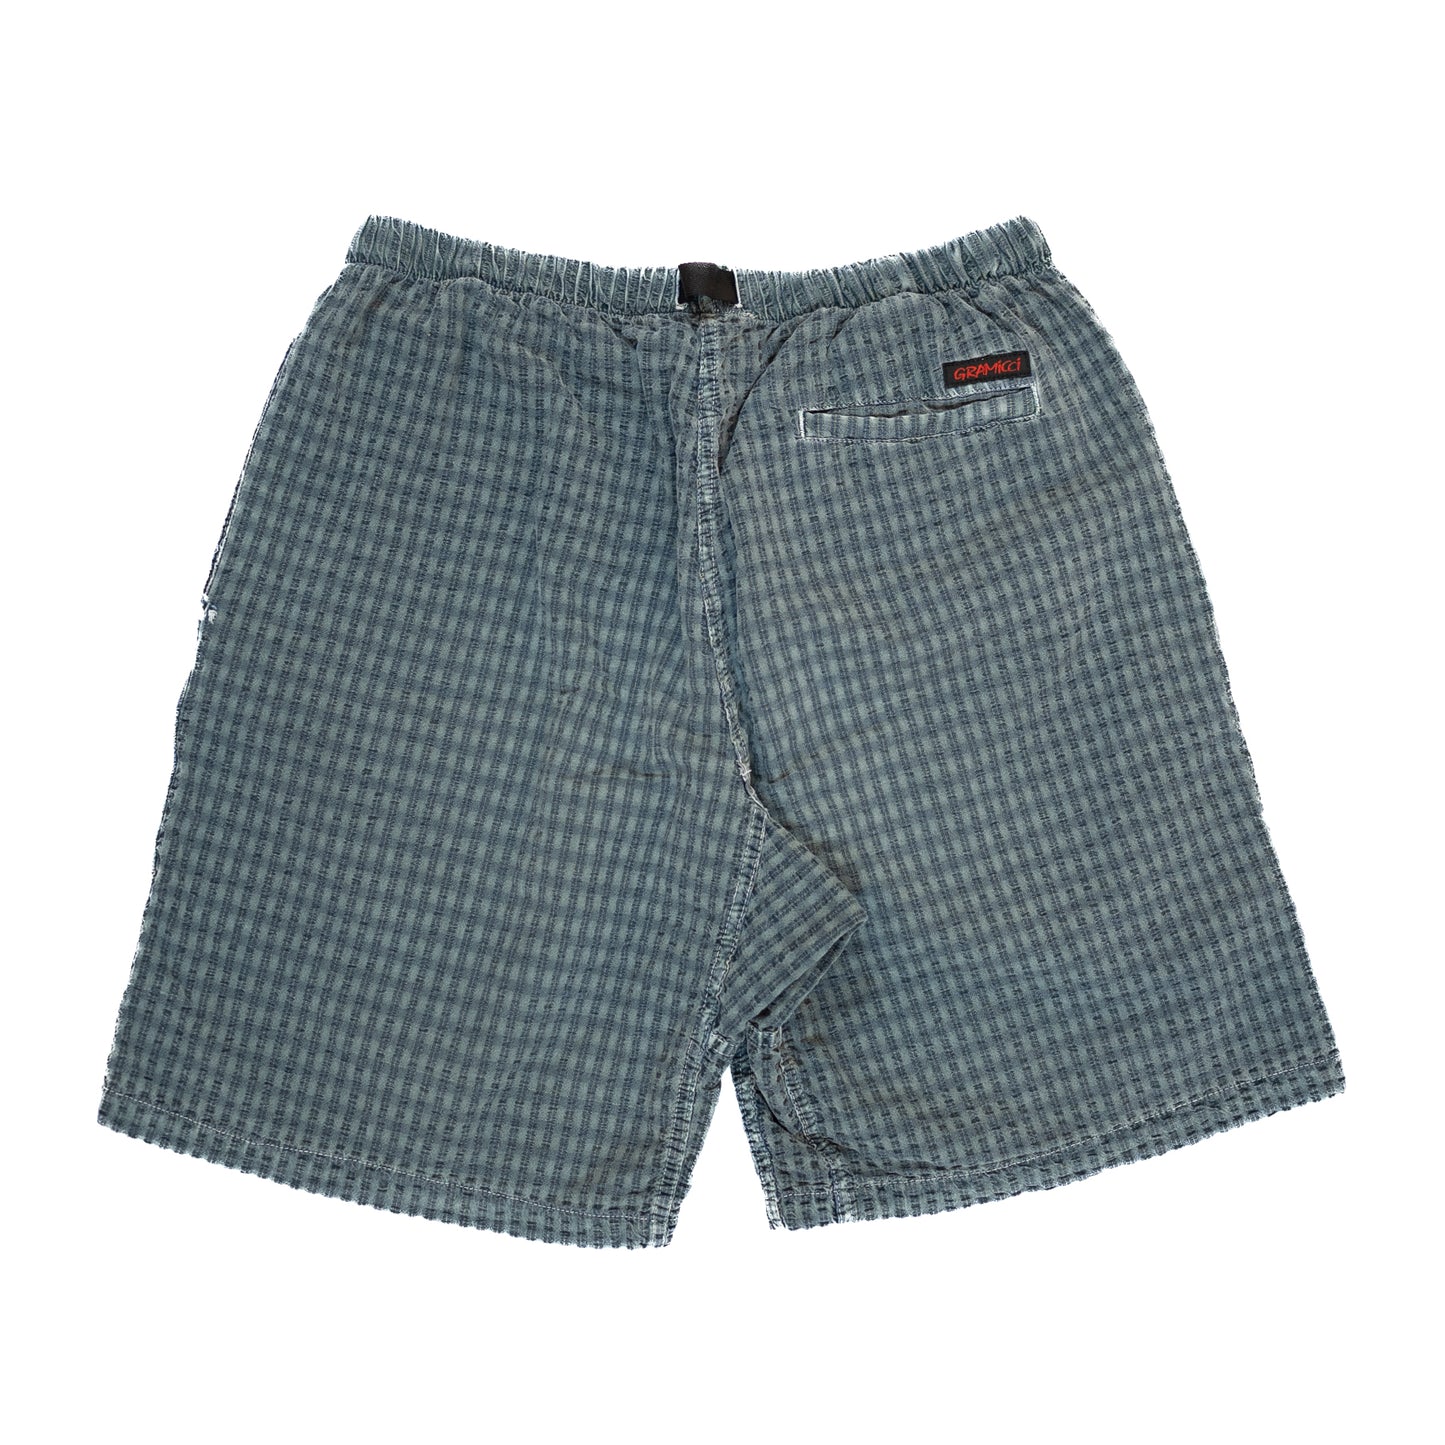 Gramicci Shorts (90s)